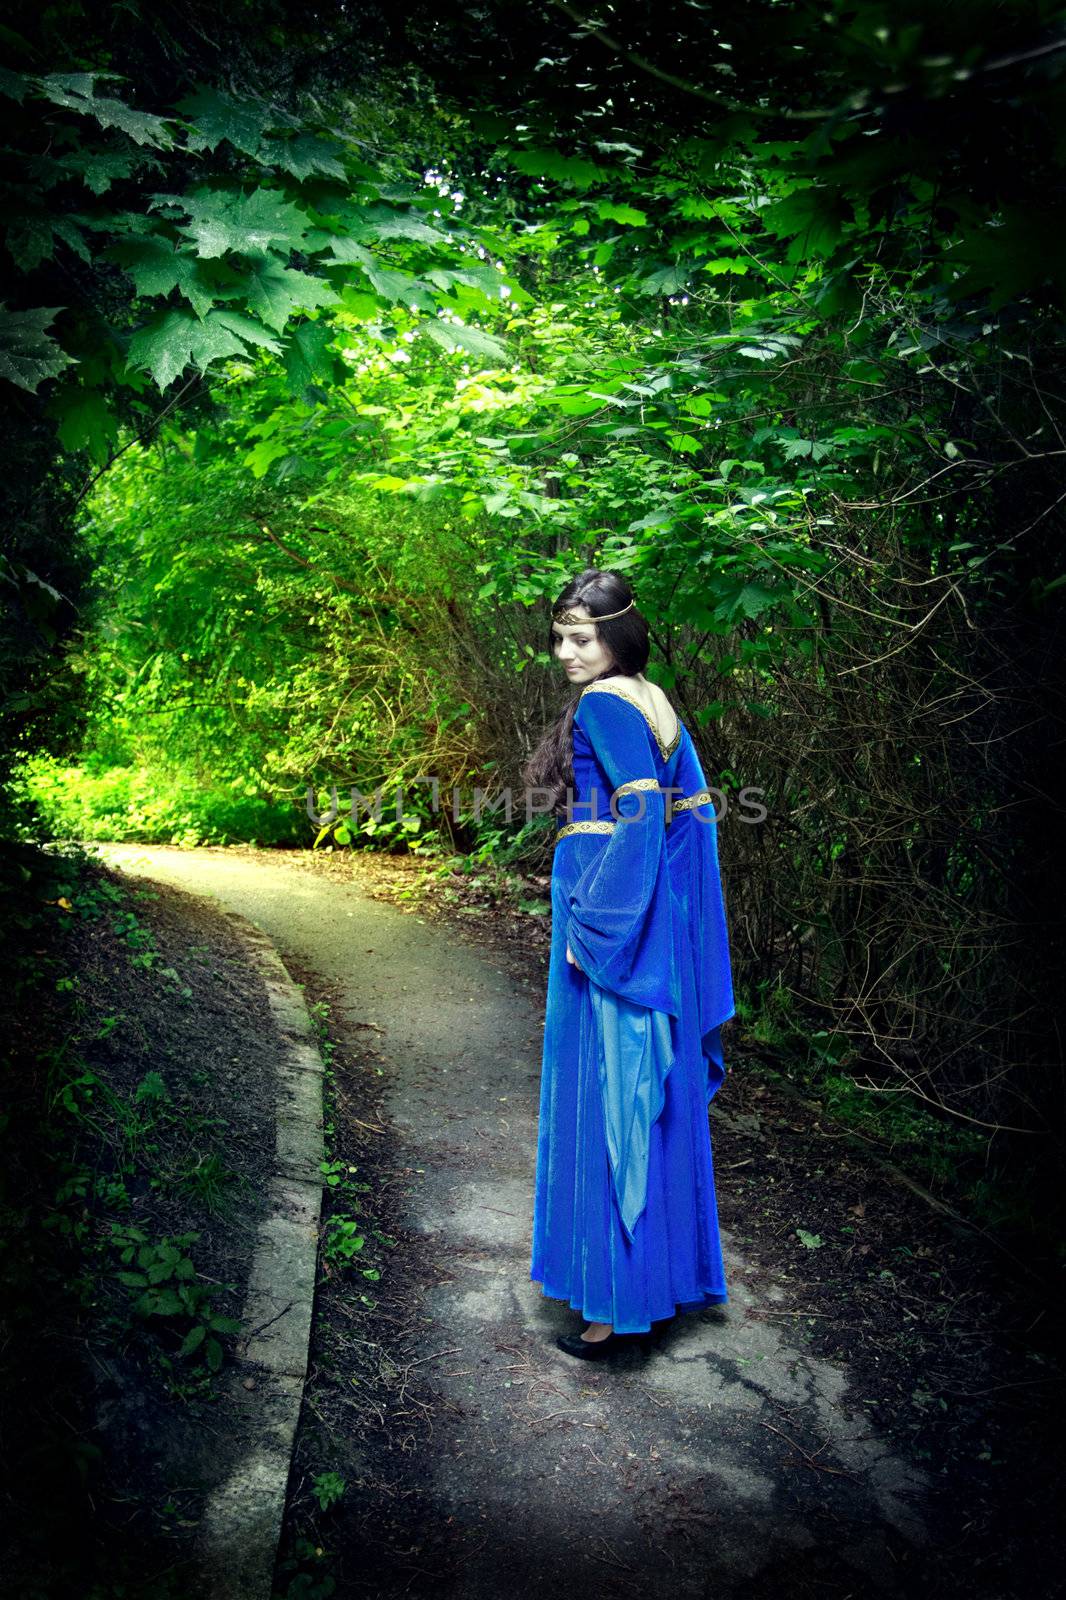 princess walk through darkest forest to the magic light